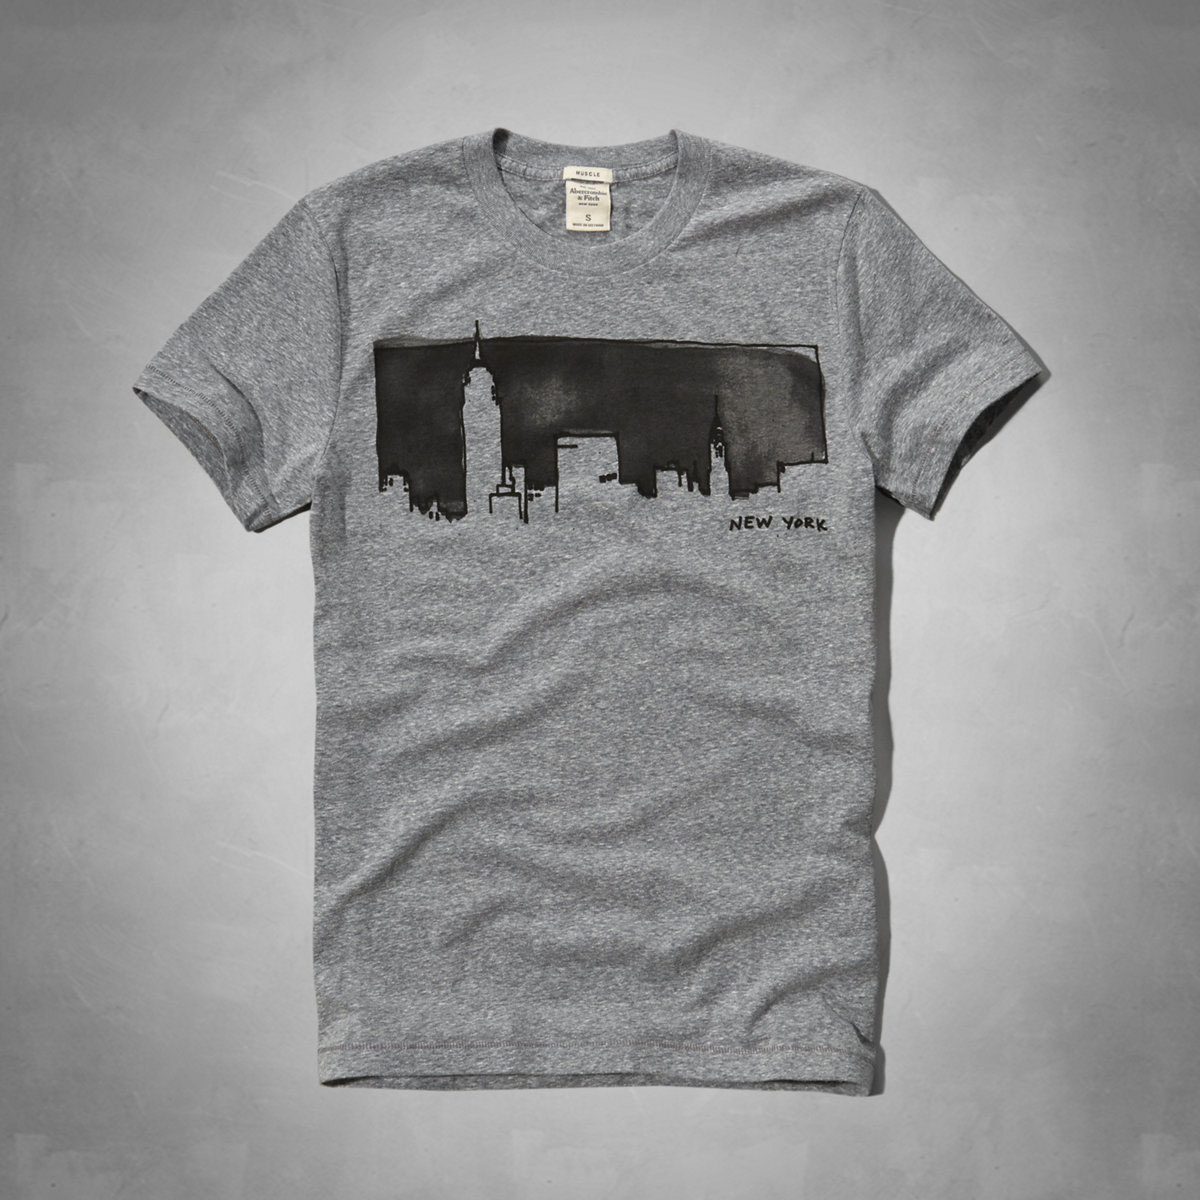 abercrombie t-shirt design